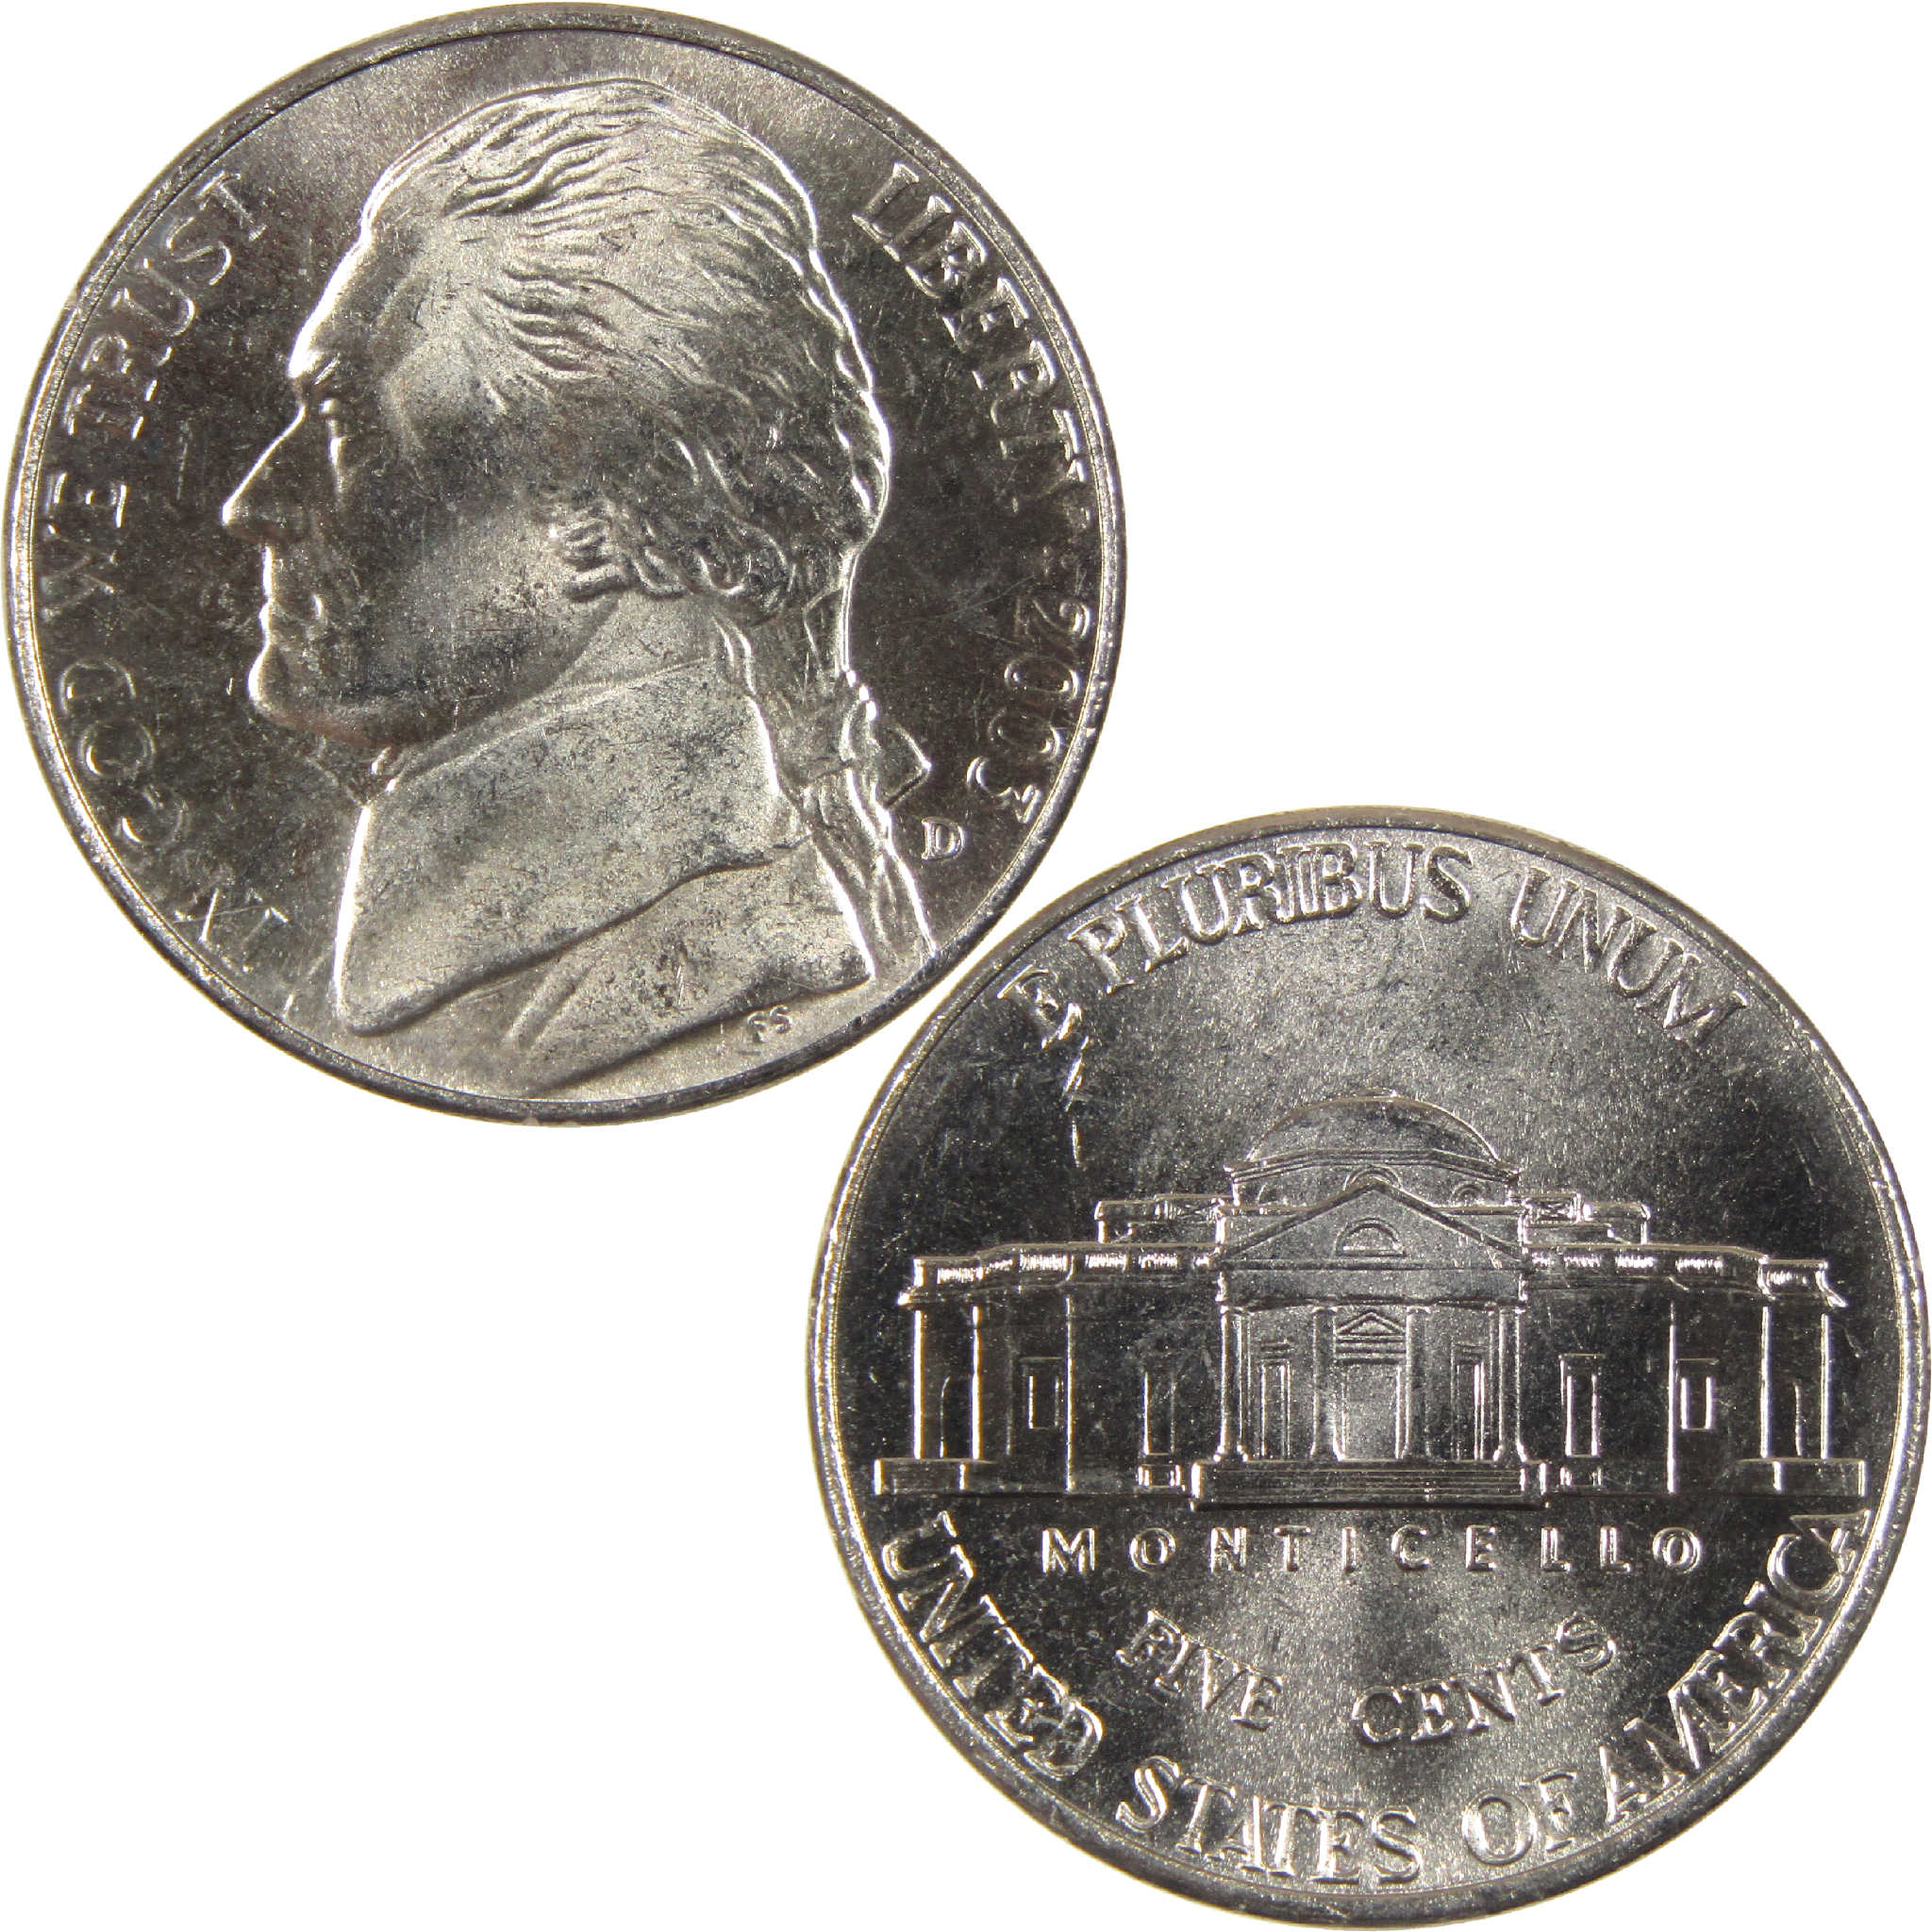 2003 D Jefferson Nickel Uncirculated 5c Coin